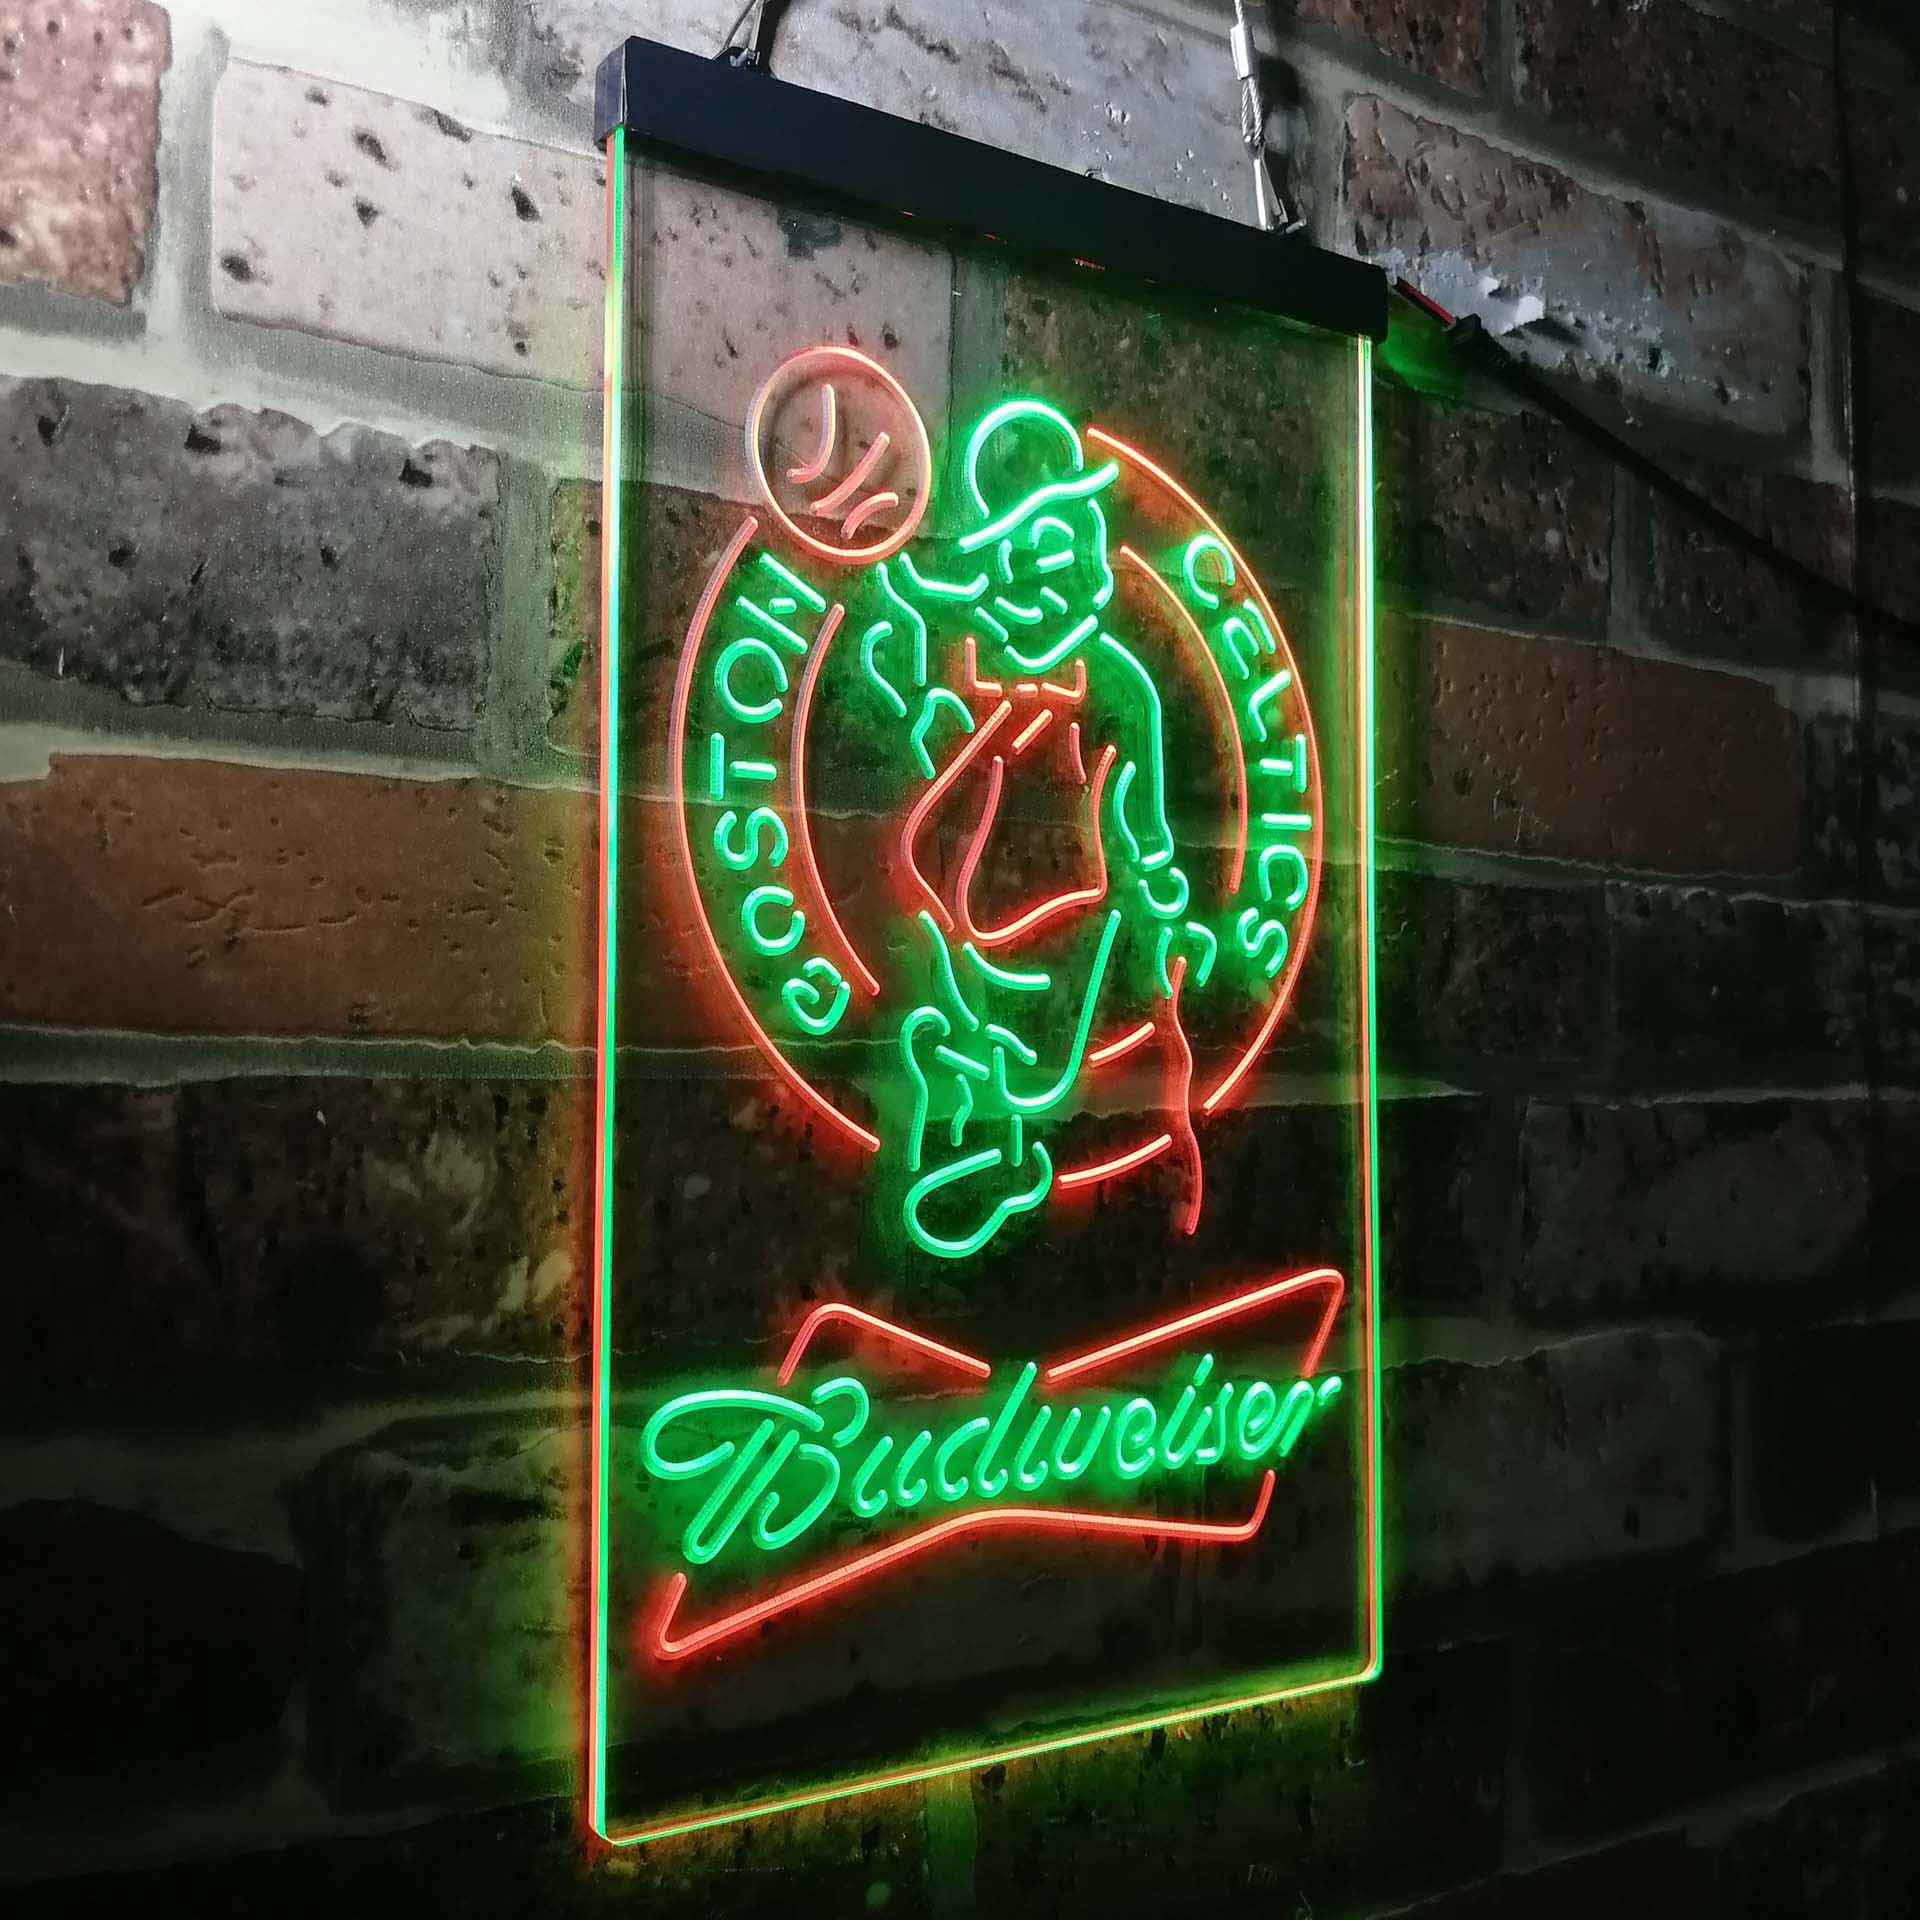 Sport Team Boston League Club Basketball Souvenir Celticss Budweisers LED Neon Sign